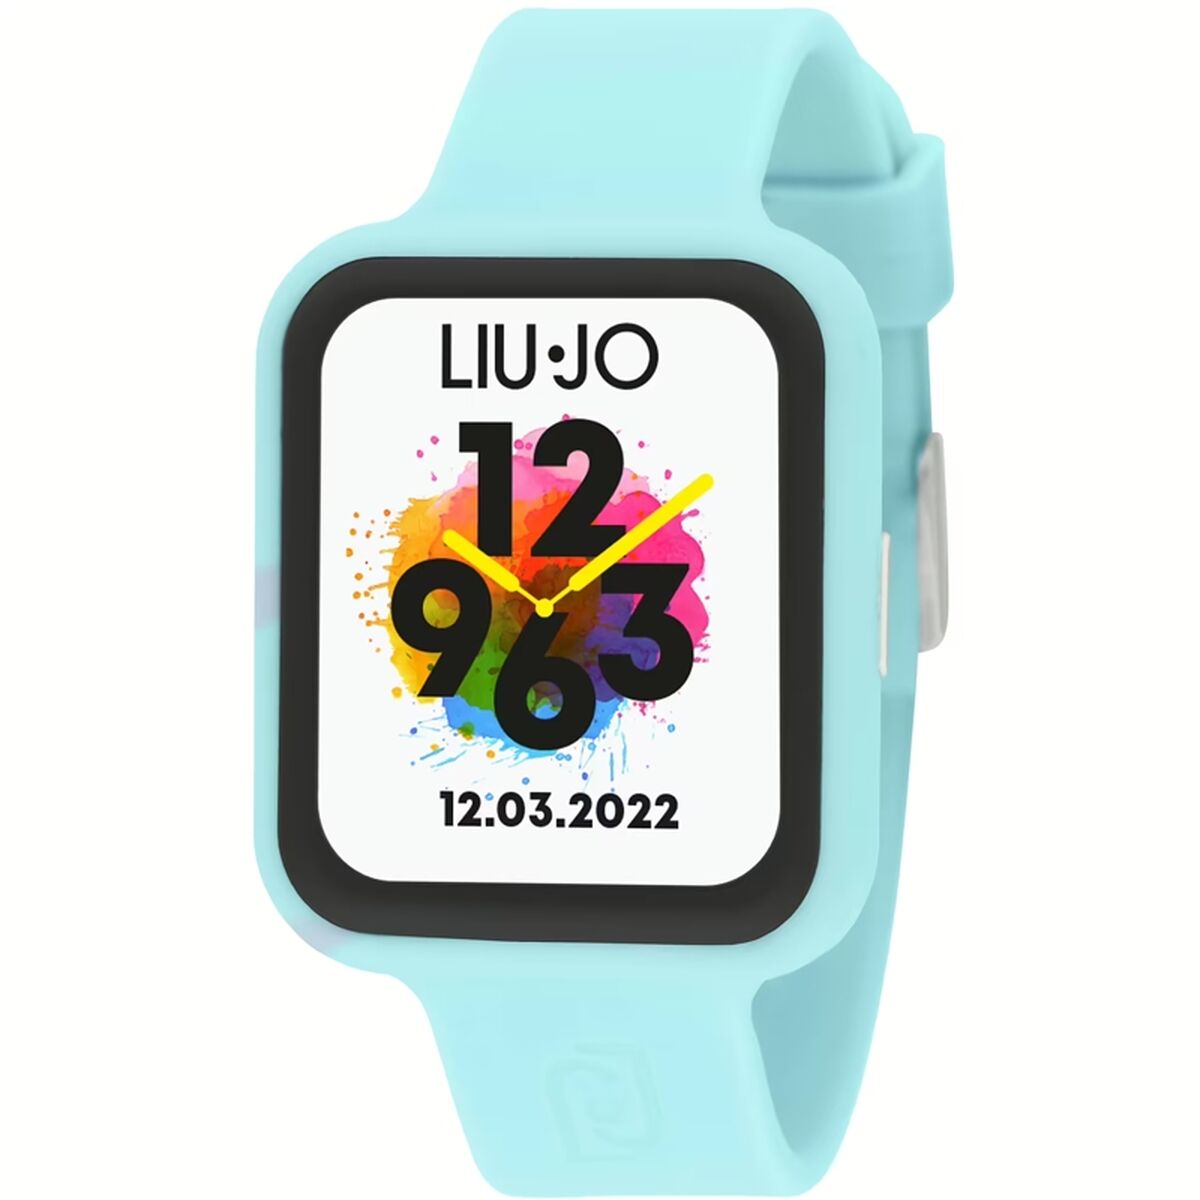 Kaufe Smartwatch LIU JO SWLJ133 bei AWK Flagship um € 123.00